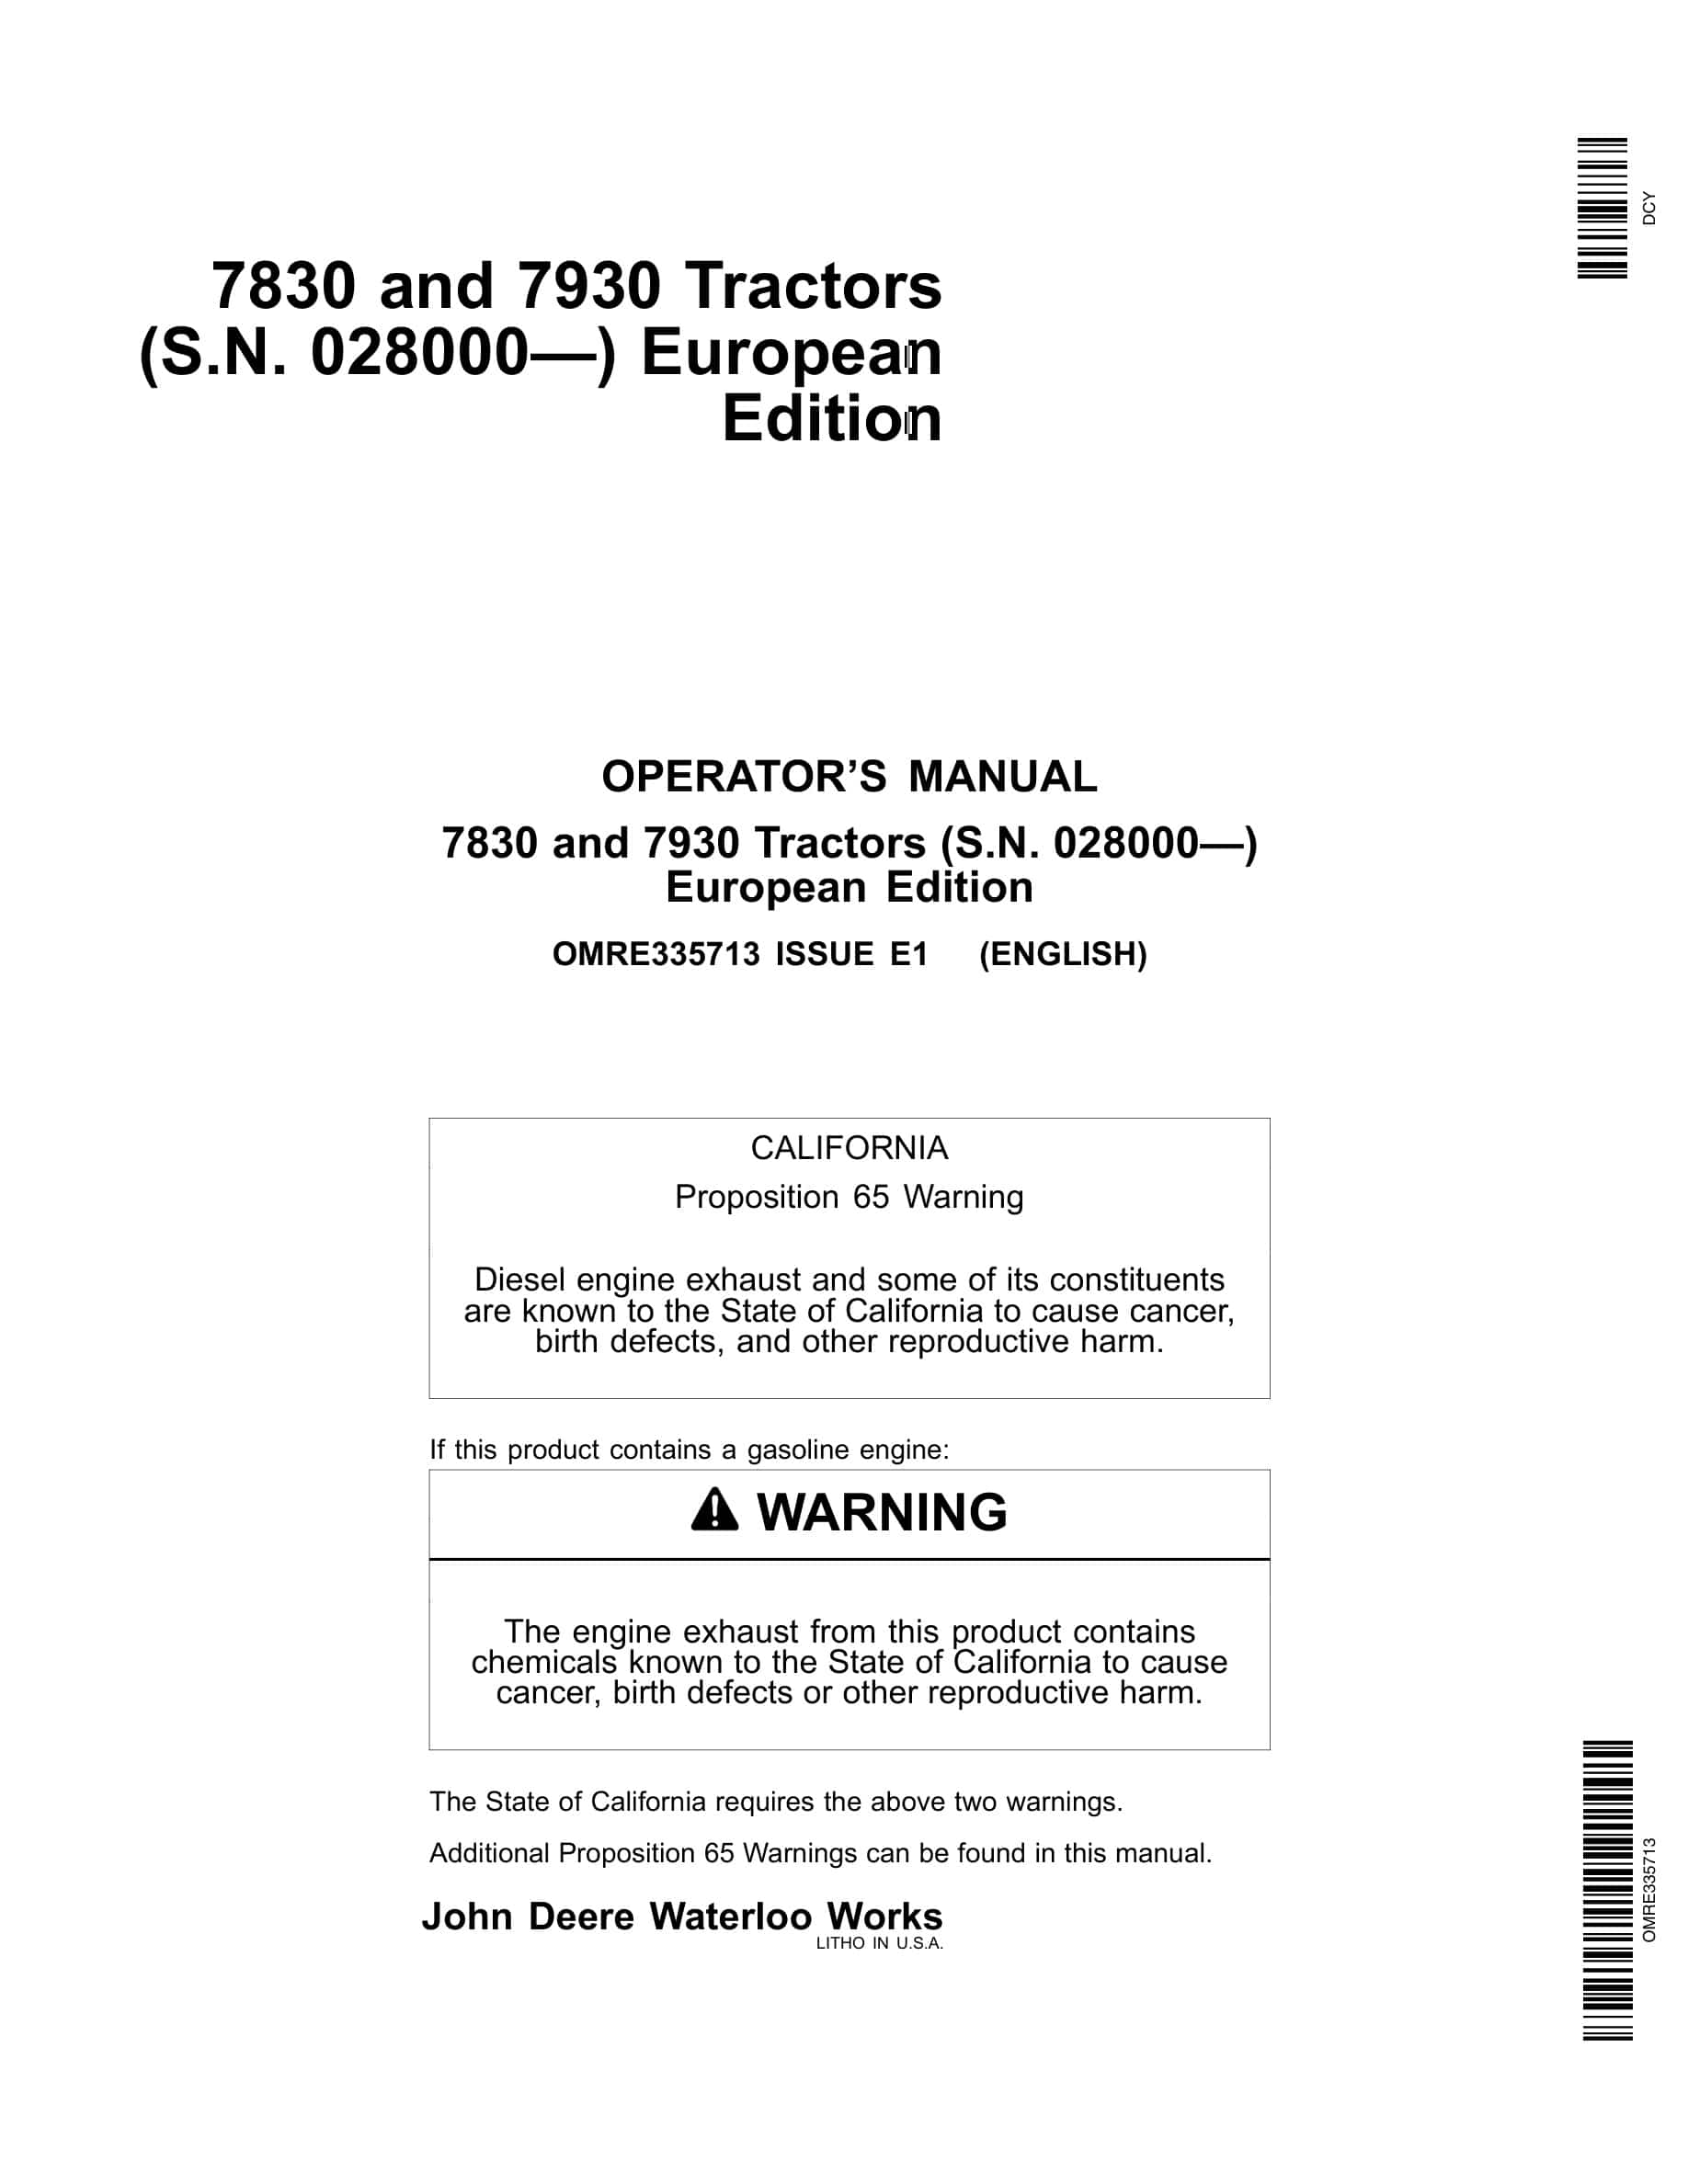 John Deere 7830 And 7930 Tractors Operator Manuals OMRE335713-1